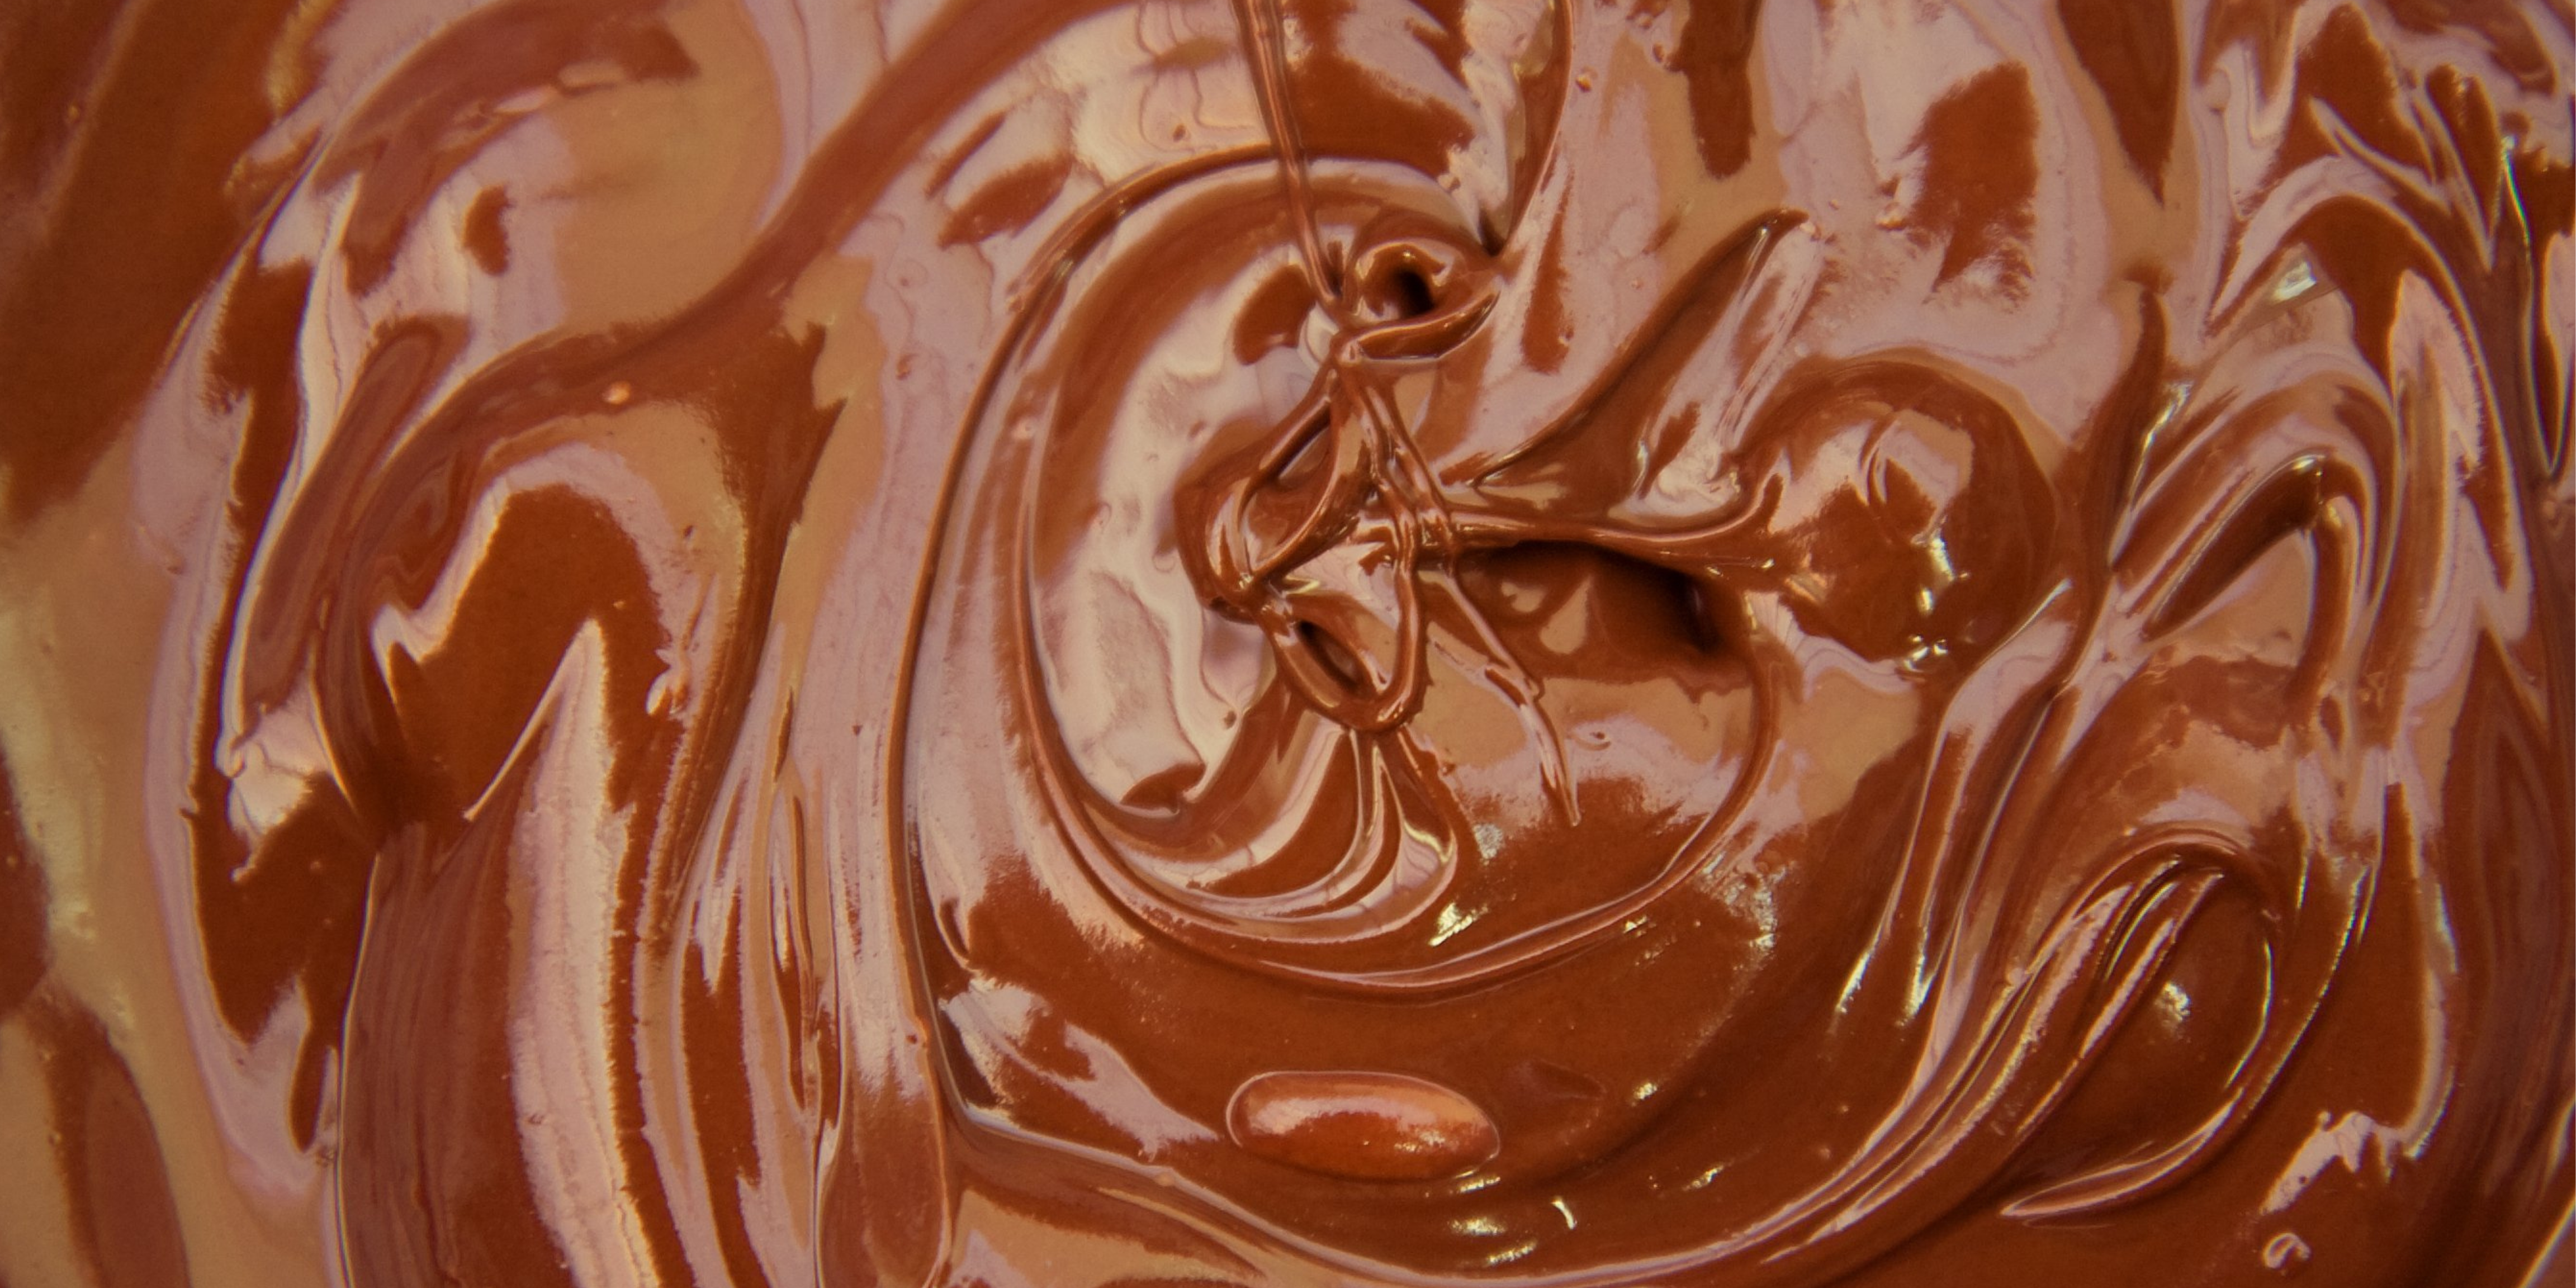 Receta de natillas caseras de chocolate sin gluten